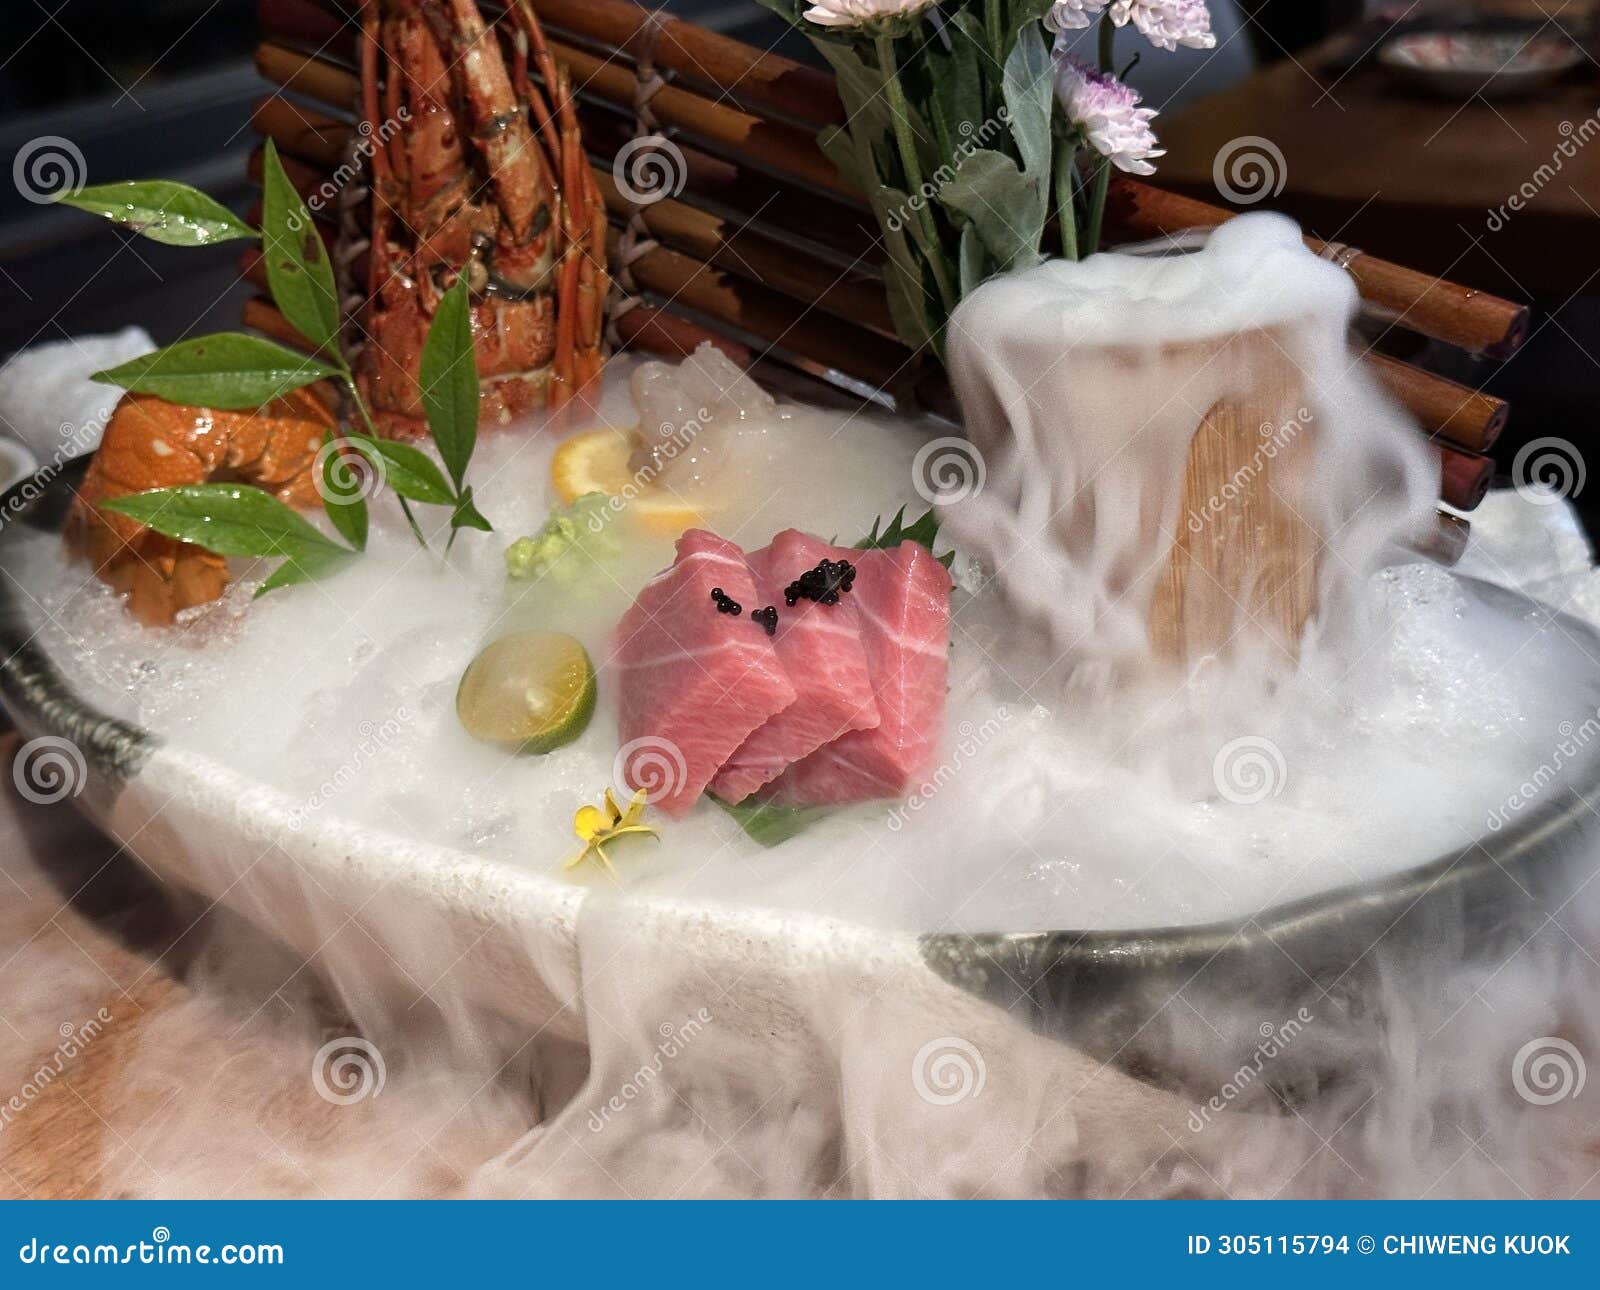 o-toro sashimi on a dish with decoration and fog effect